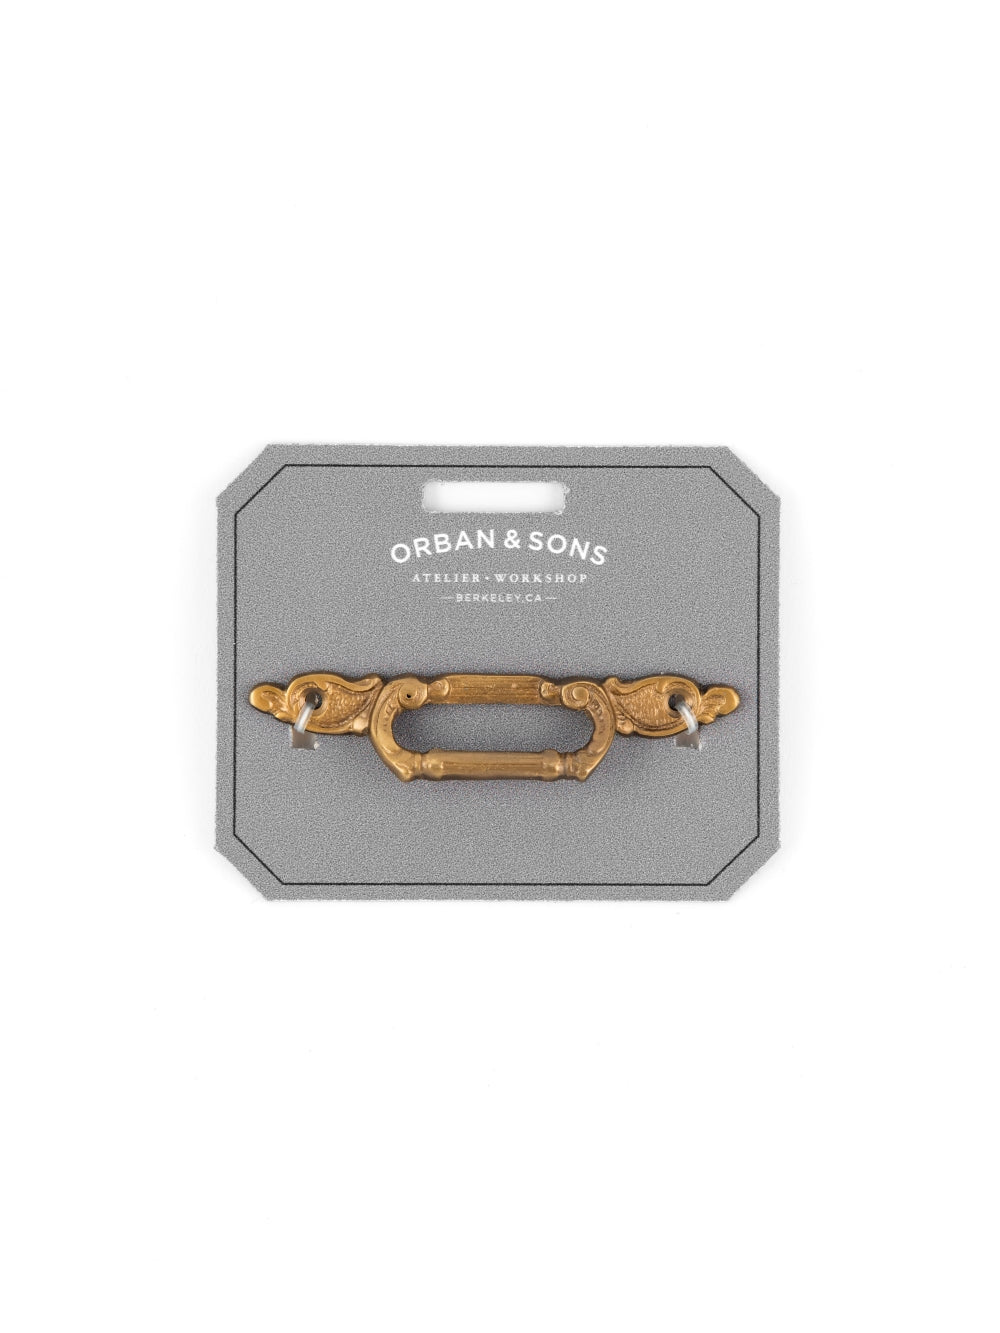 Orban & Sons Brass Cabinet Pulls Brass Puller #2 (0.78" x 3.54") Orban & Sons Brand_Orban & Sons Corkscrews & Tools Orban & Sons Orban_SonsBrassCabinetPulls_1